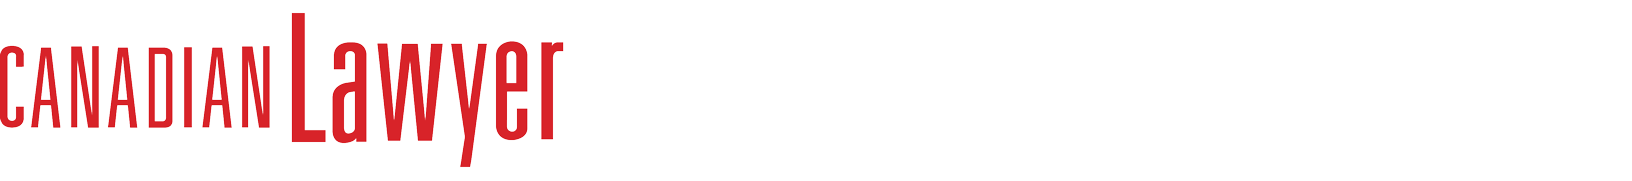 Employment Law Masterclass Logo